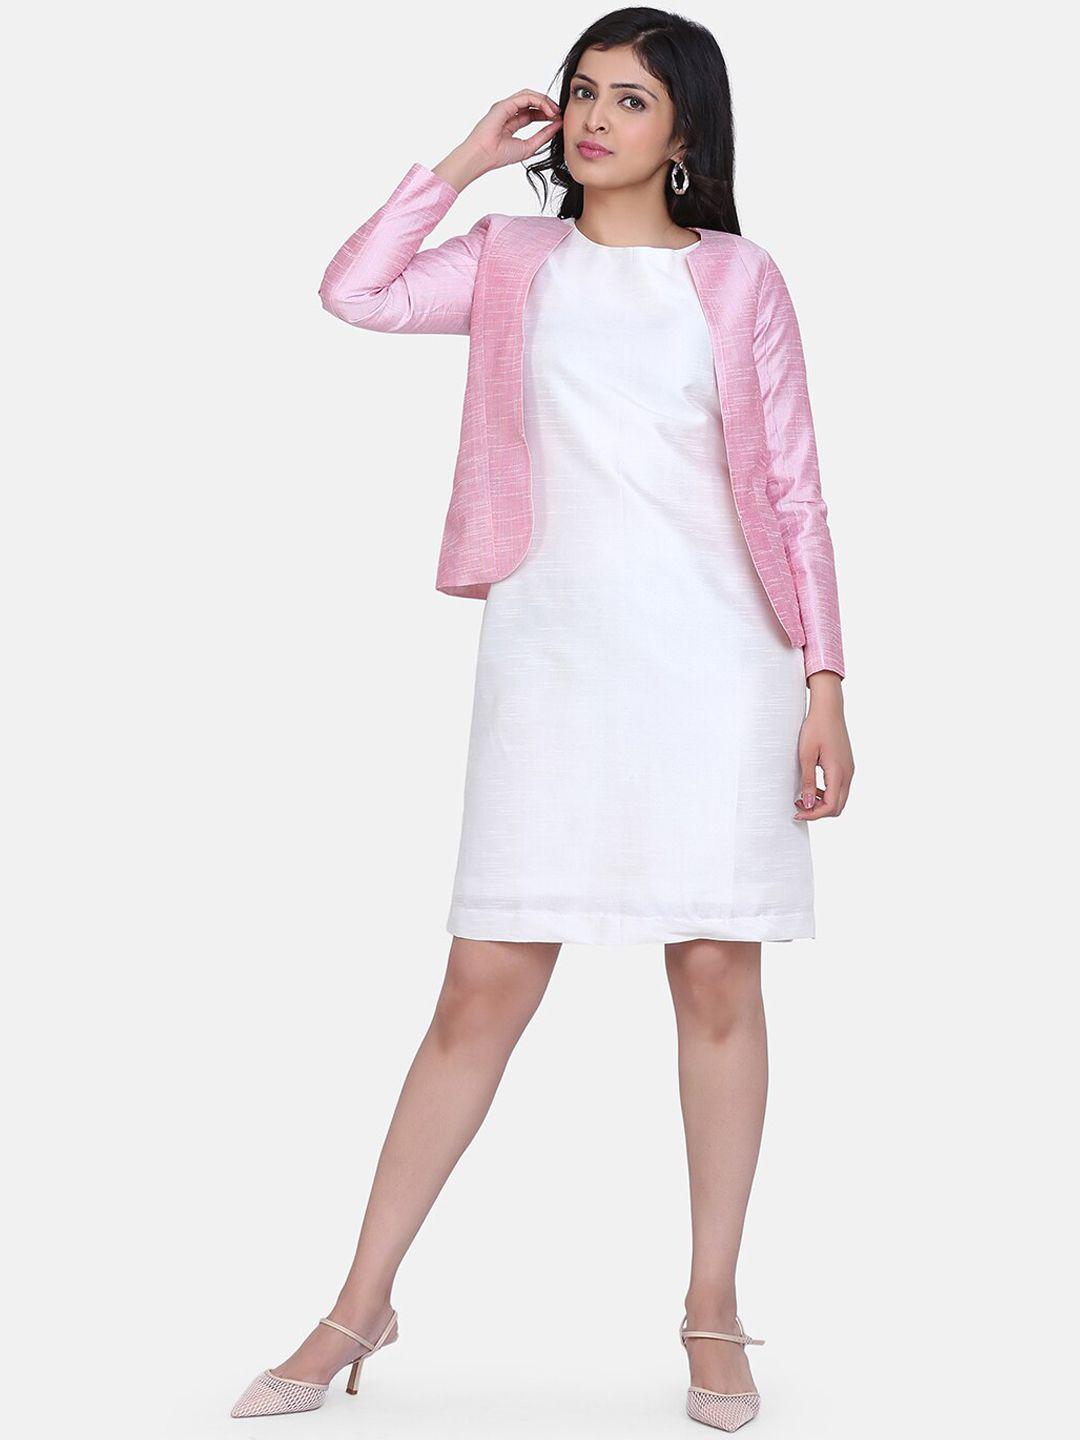 powersutra-women-pink-open-front-jacket